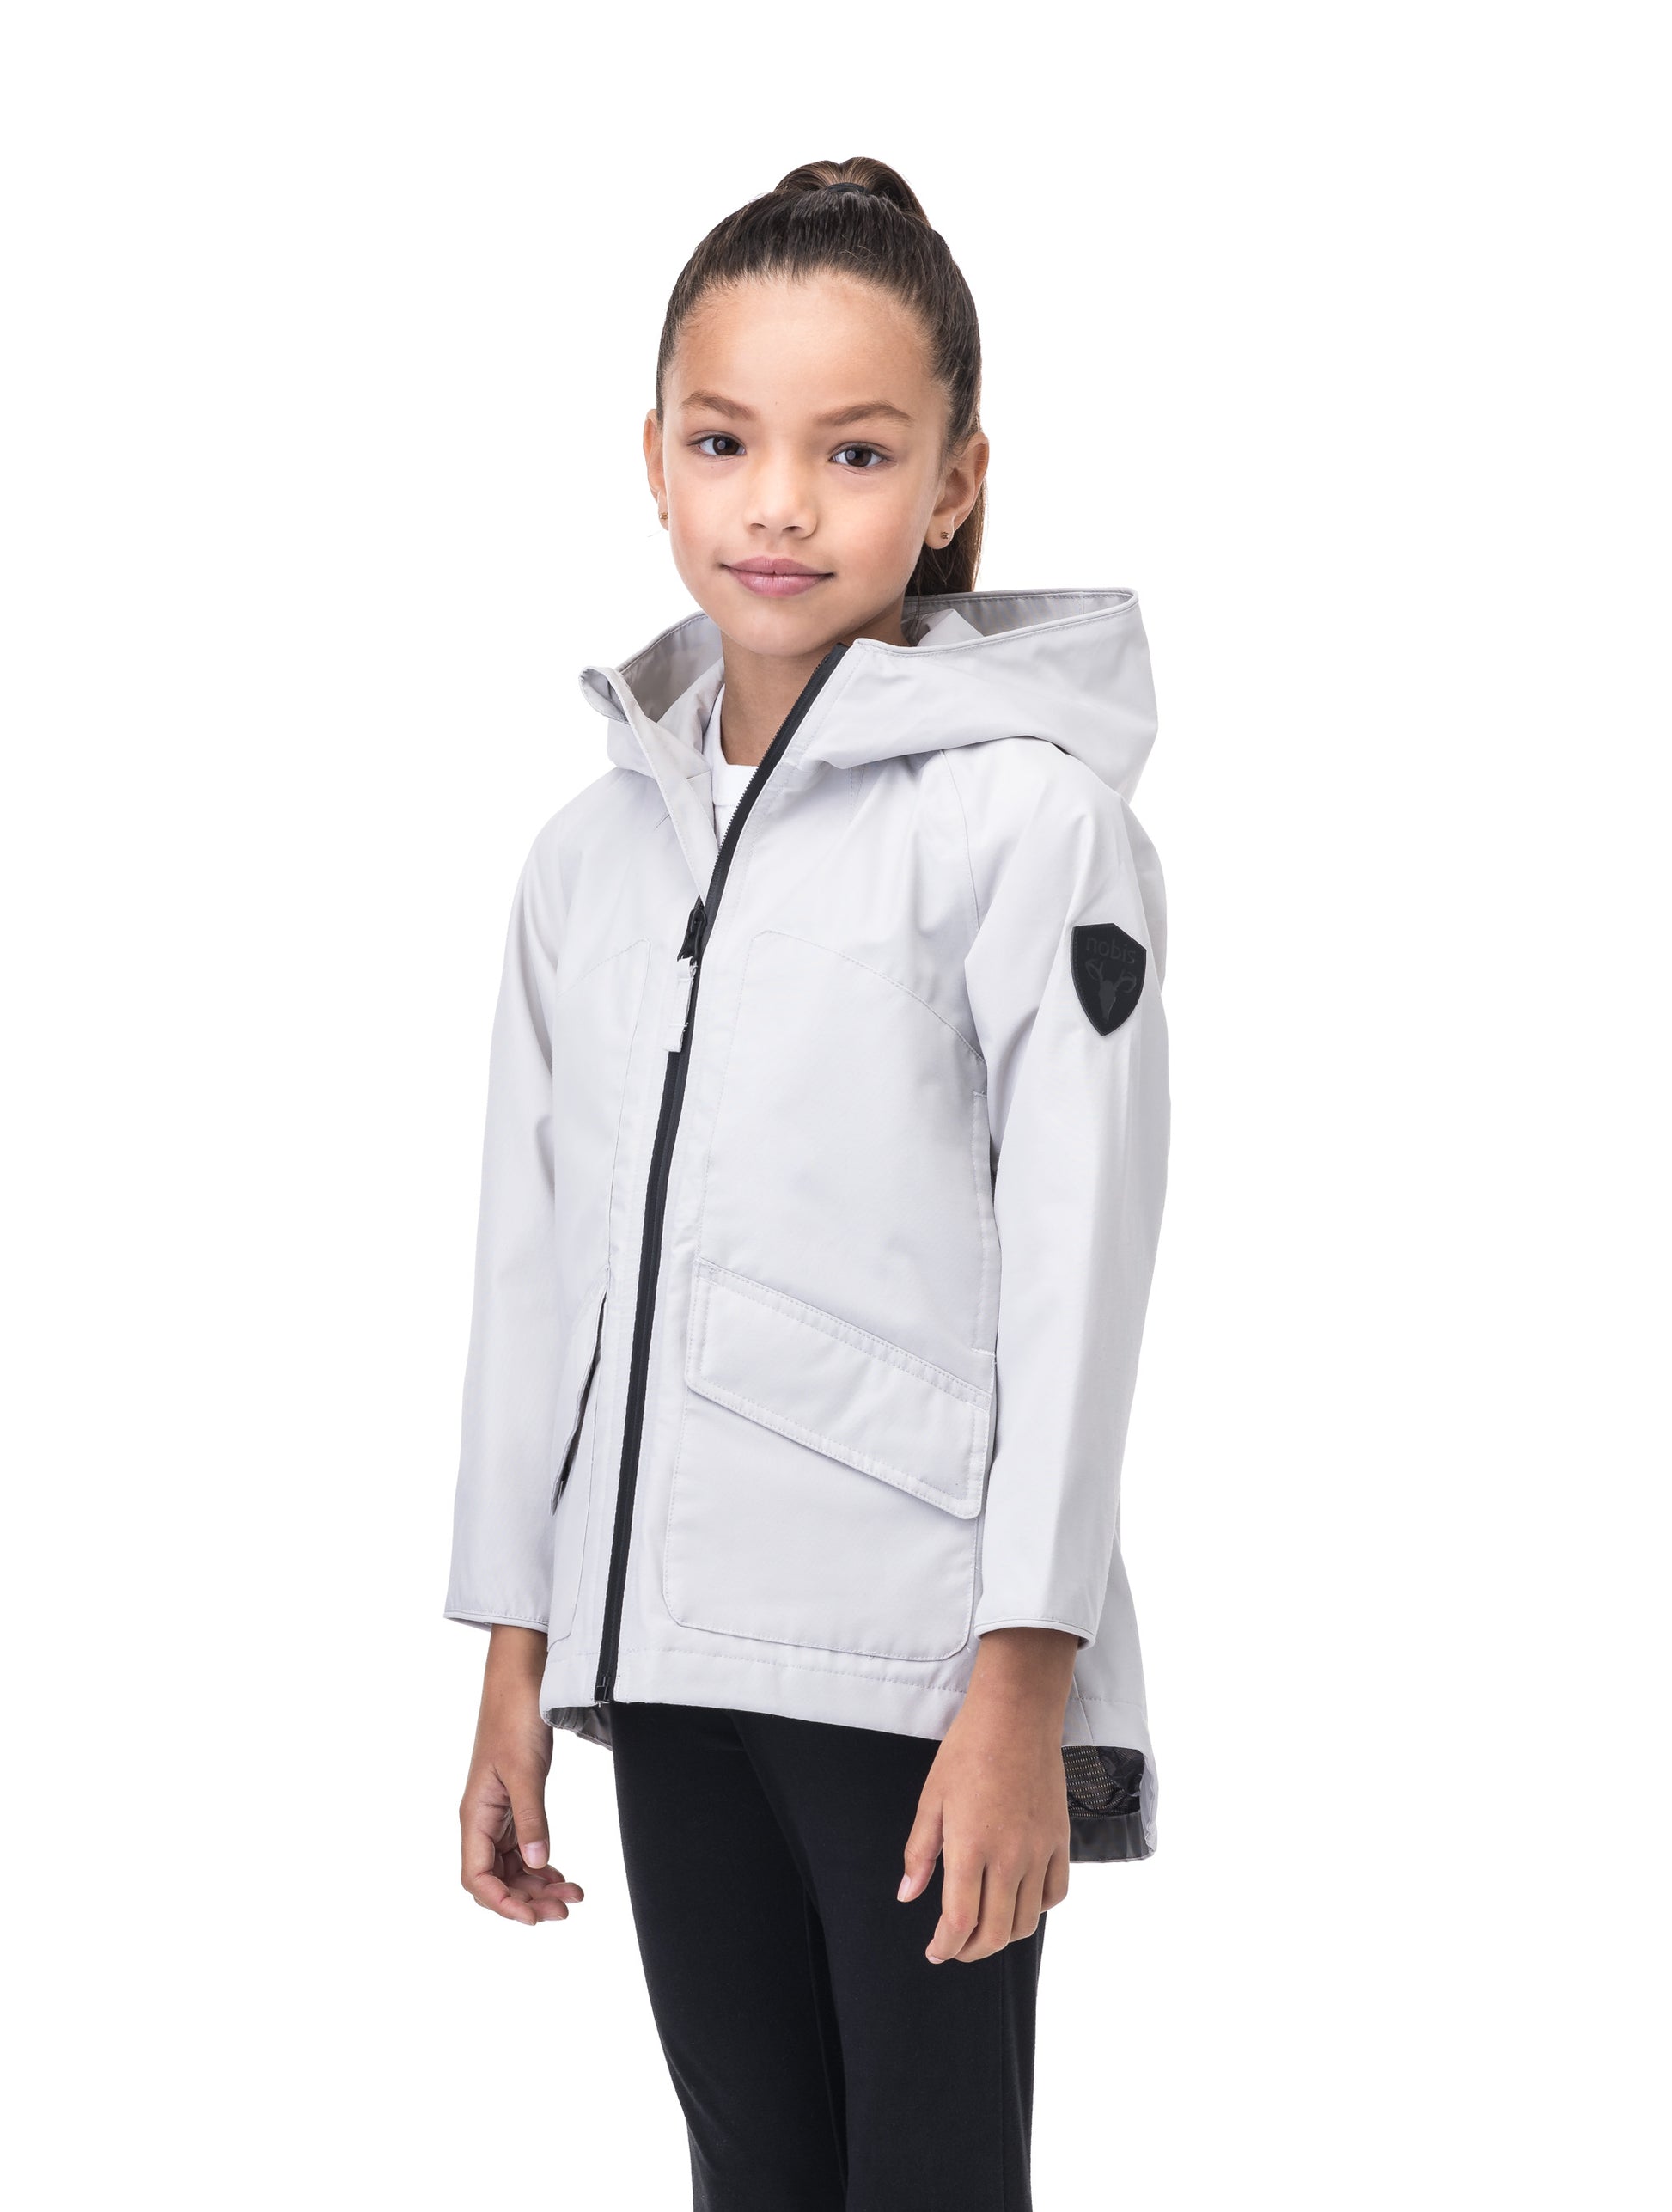 Kid's hip length fishtail rain jacket with hood in Light Grey